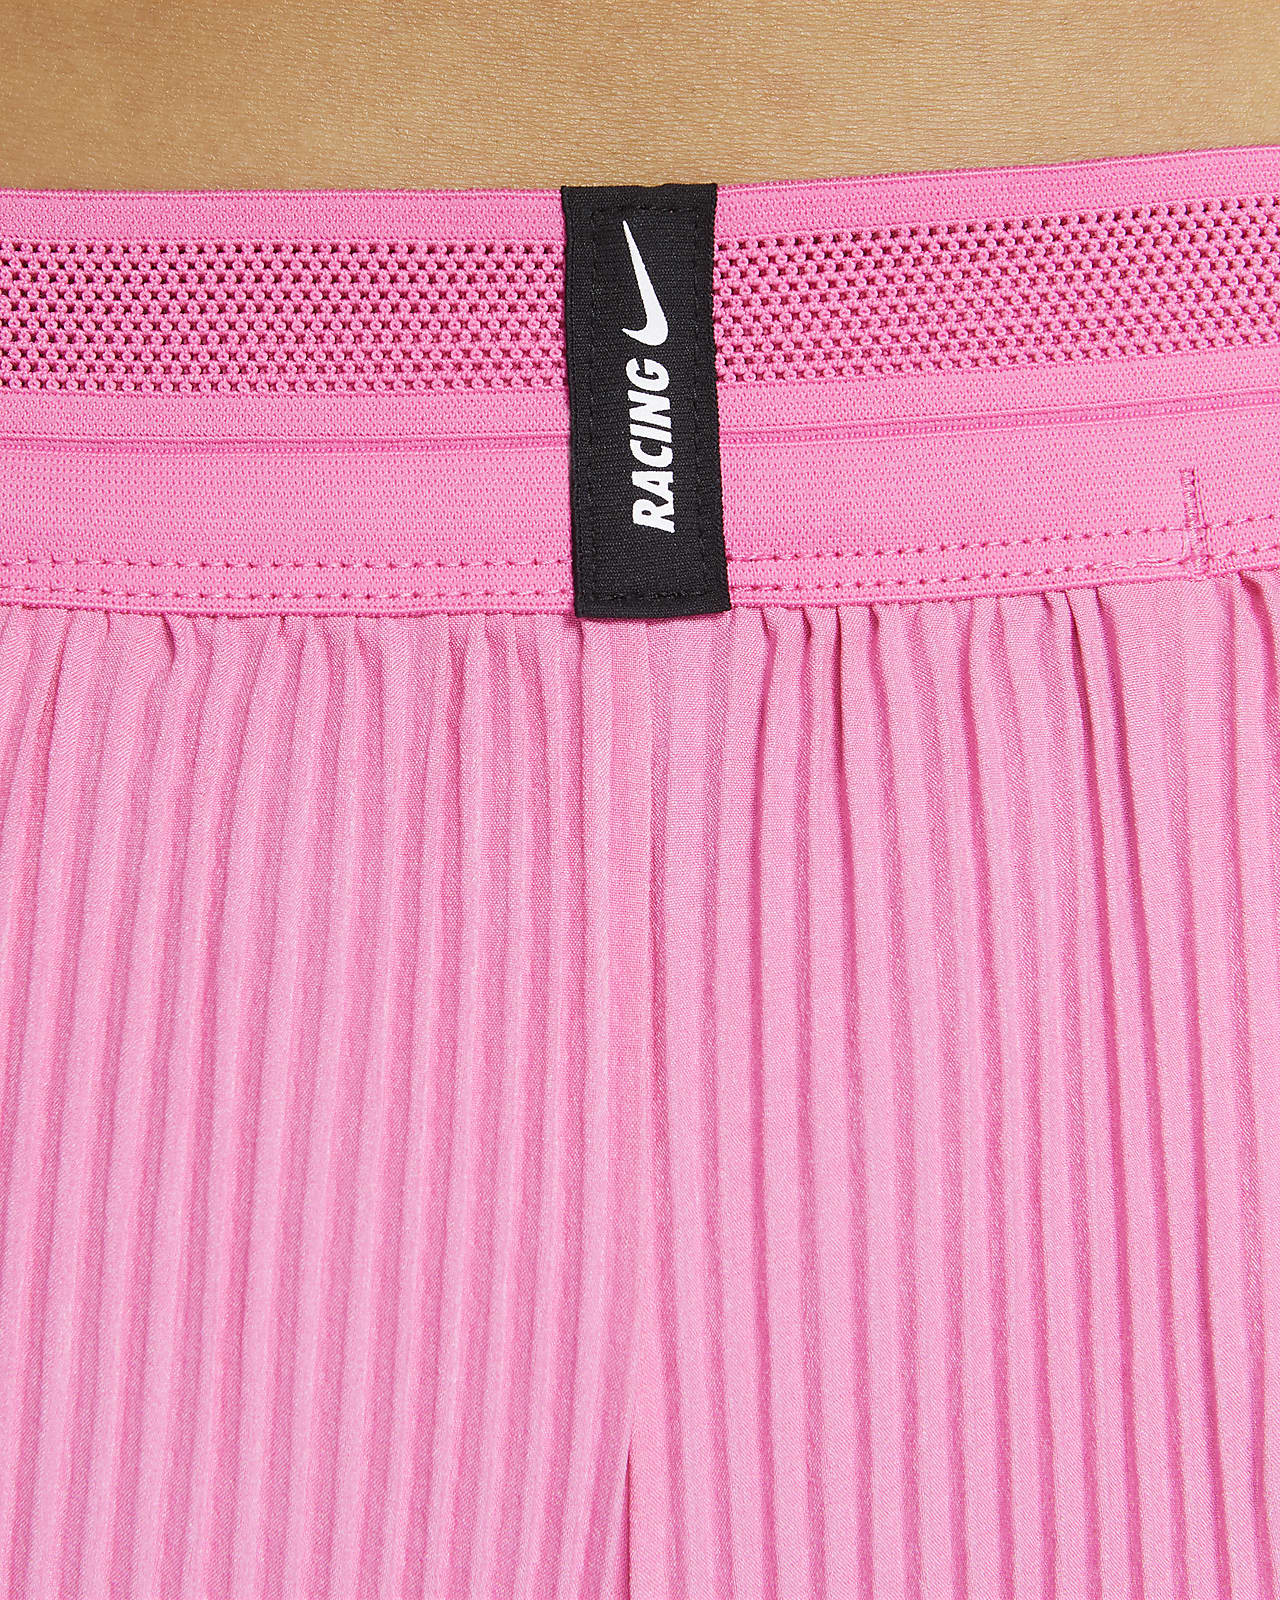 Women's Nike Aeroswift RunTraining Shorts Lined Slim Fit CJ2365 010 Size XL